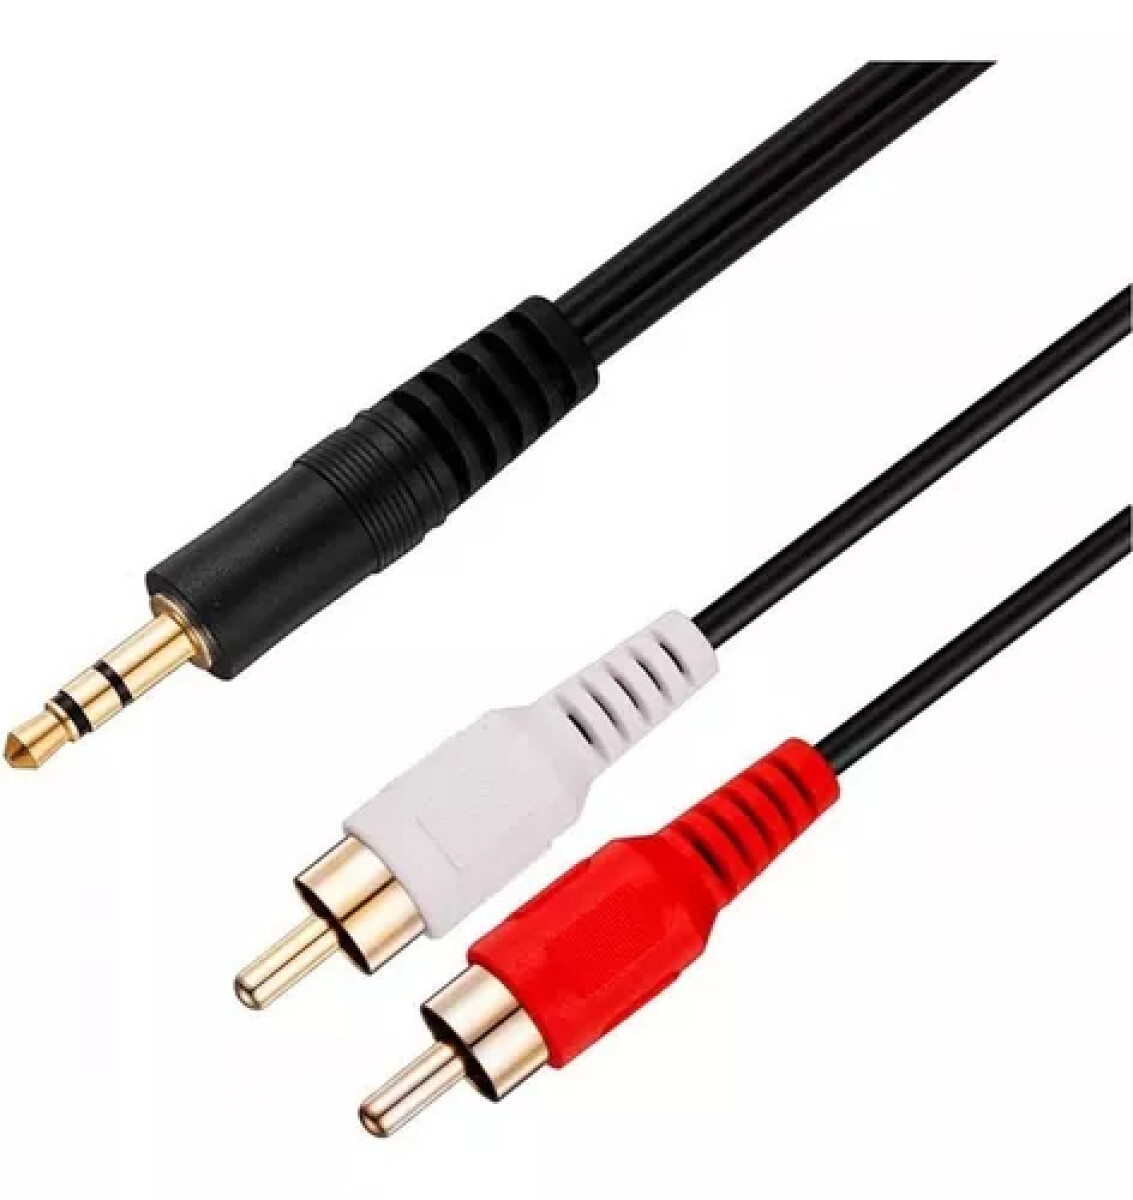 Cable Audio 2 RCA M/1 Plug M 3 mts | Anbyte - Cable Audio 2 Rca M/1 Plug M 3 Mts | Anbyte 